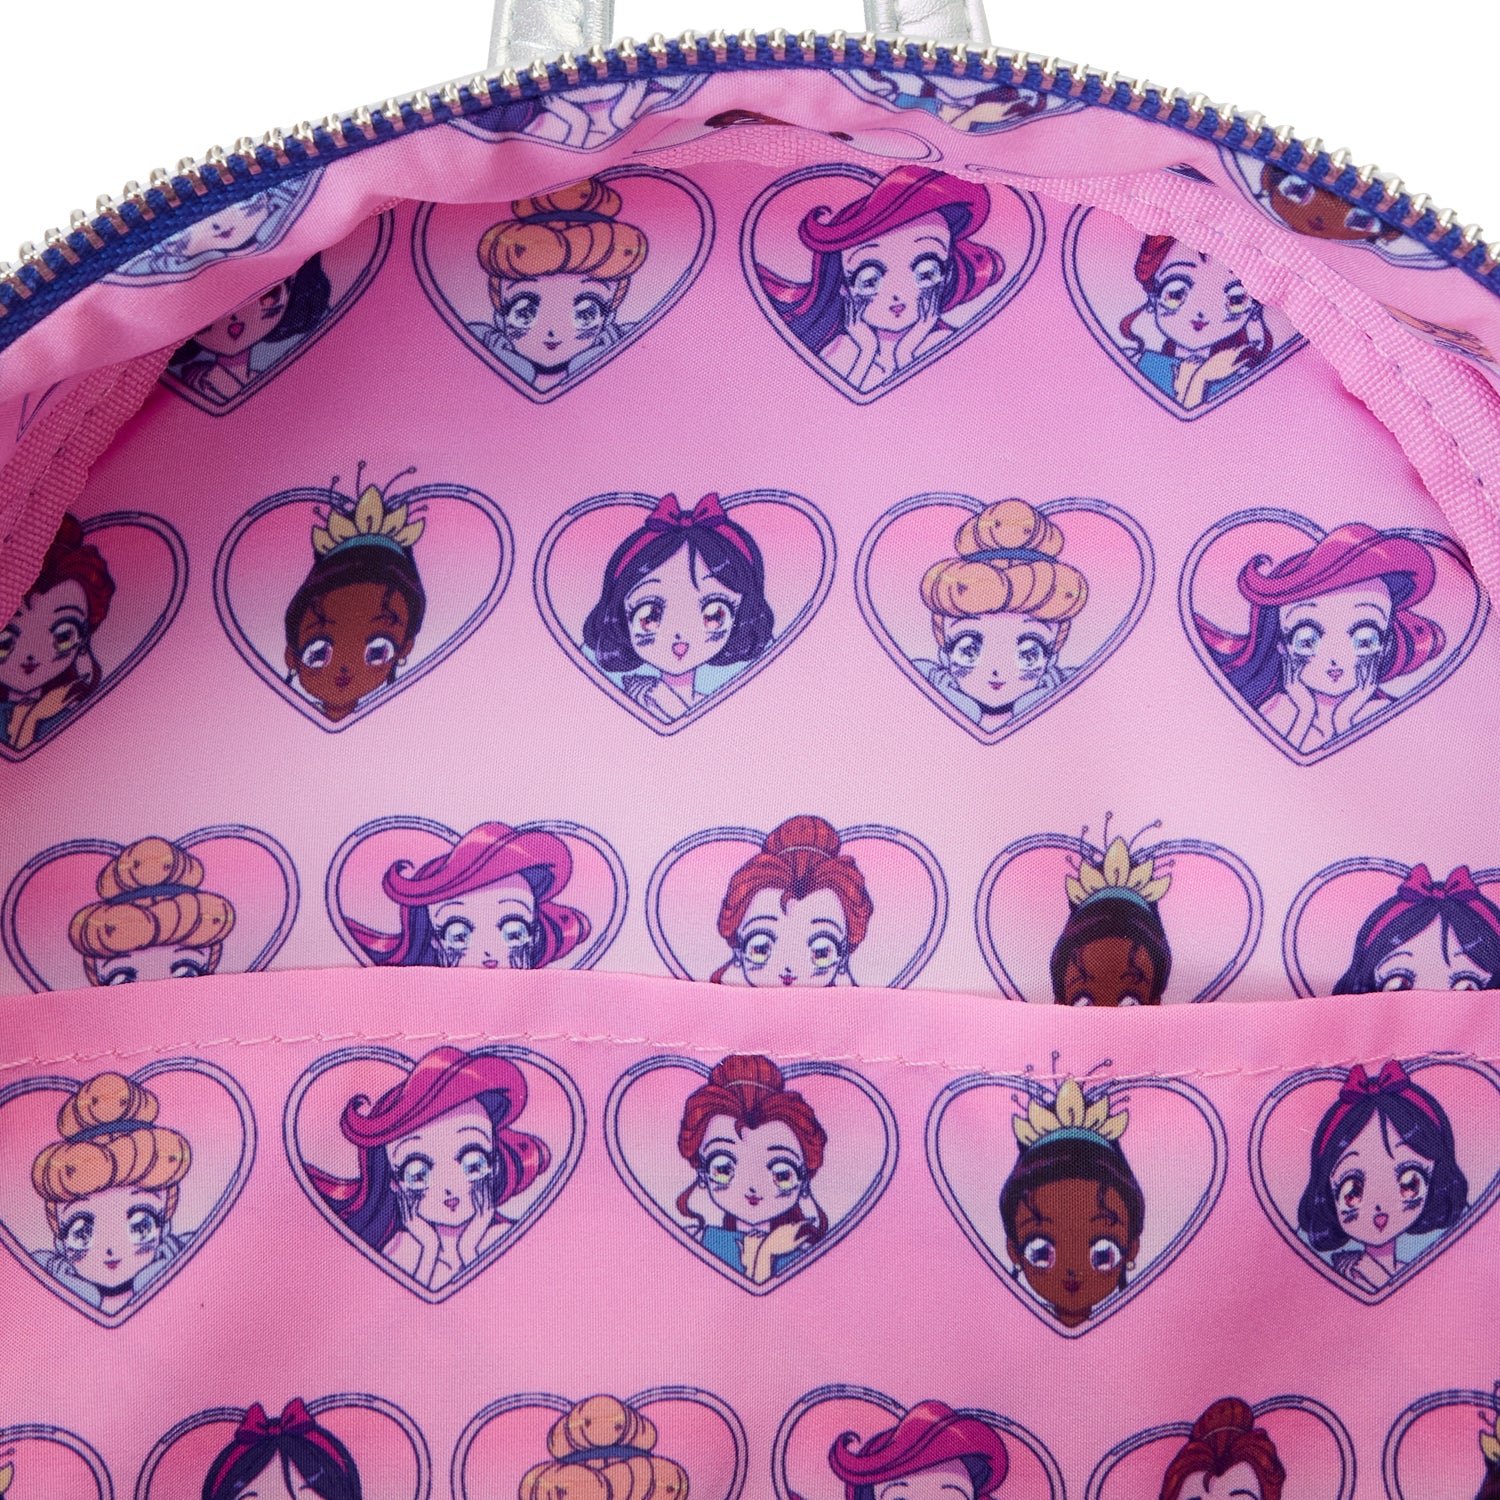 Loungefly Disney Princess Manga Style Mini Backpack